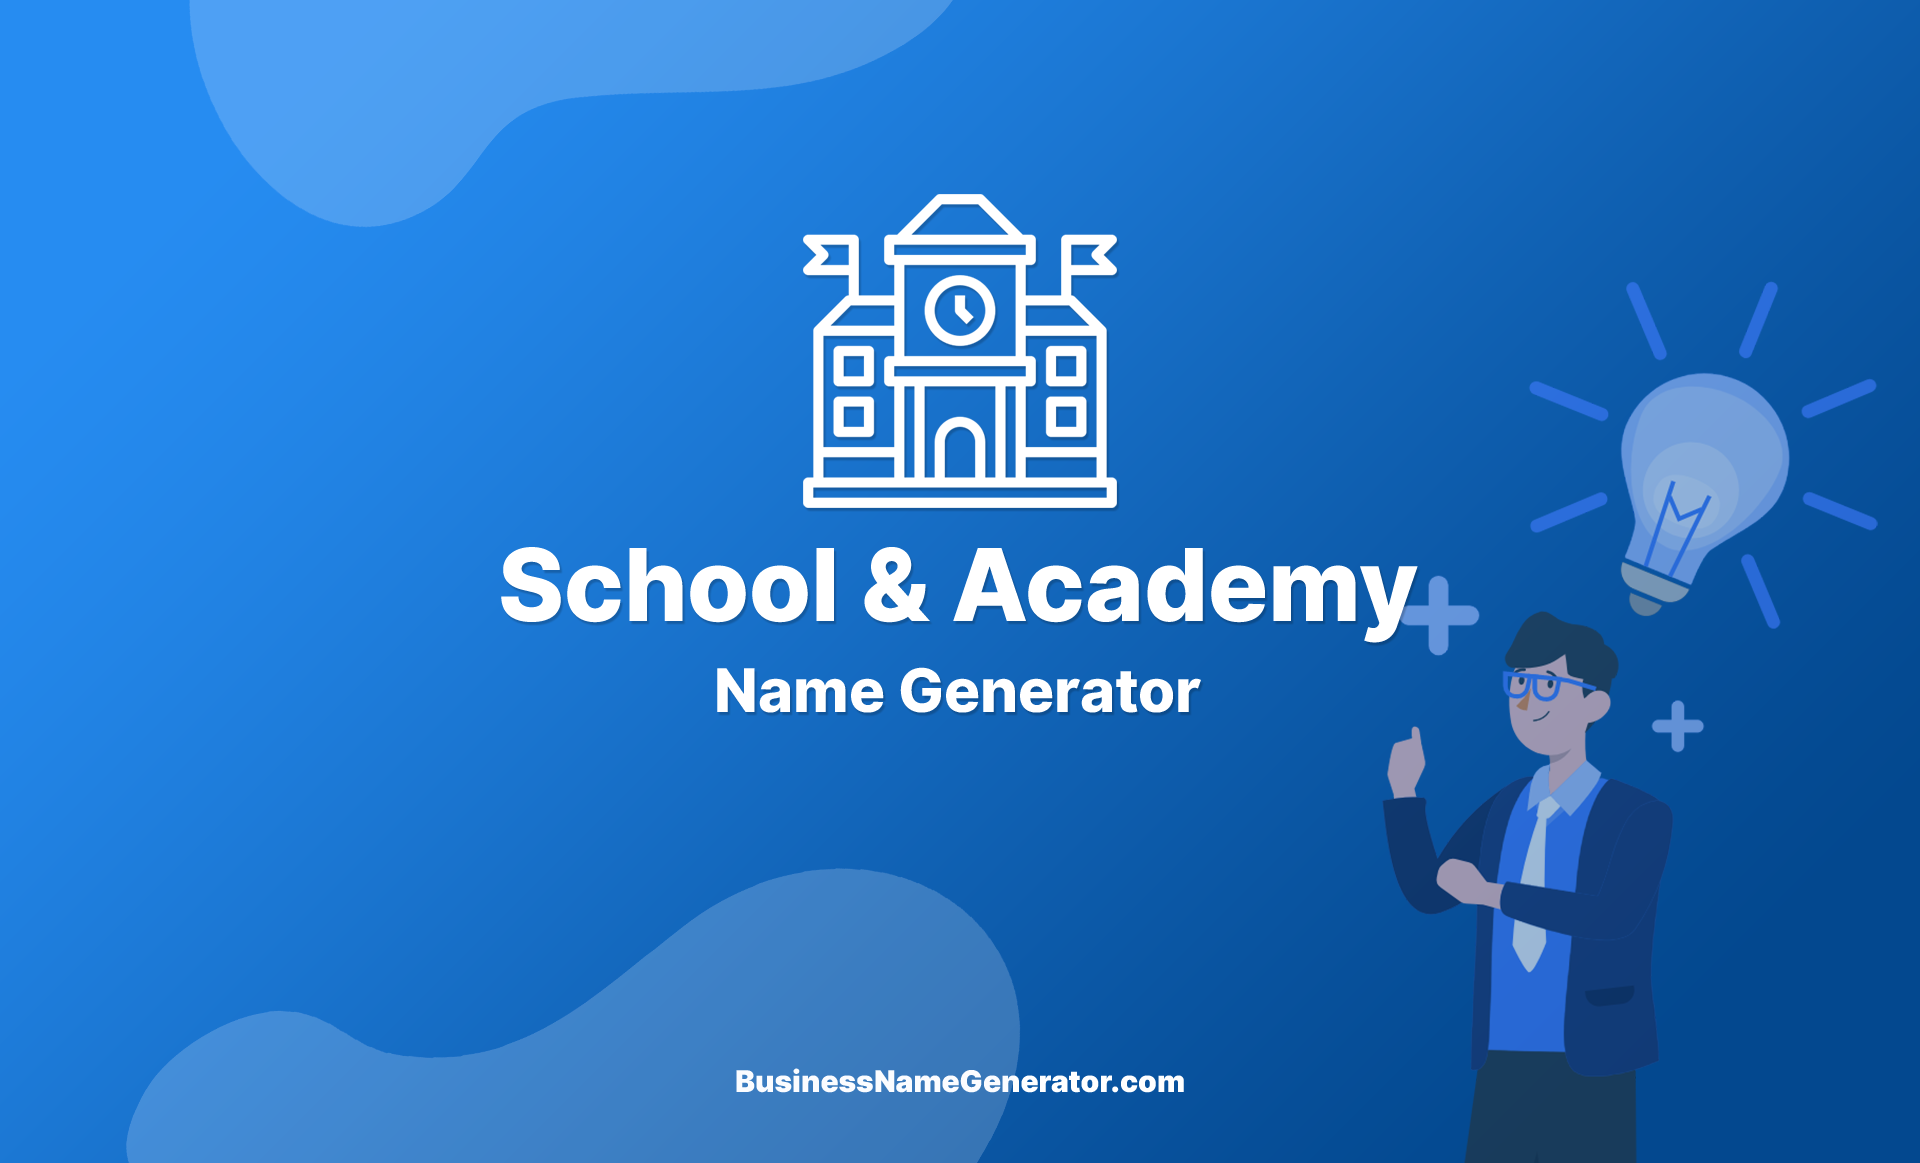 School & Academy Name Generator